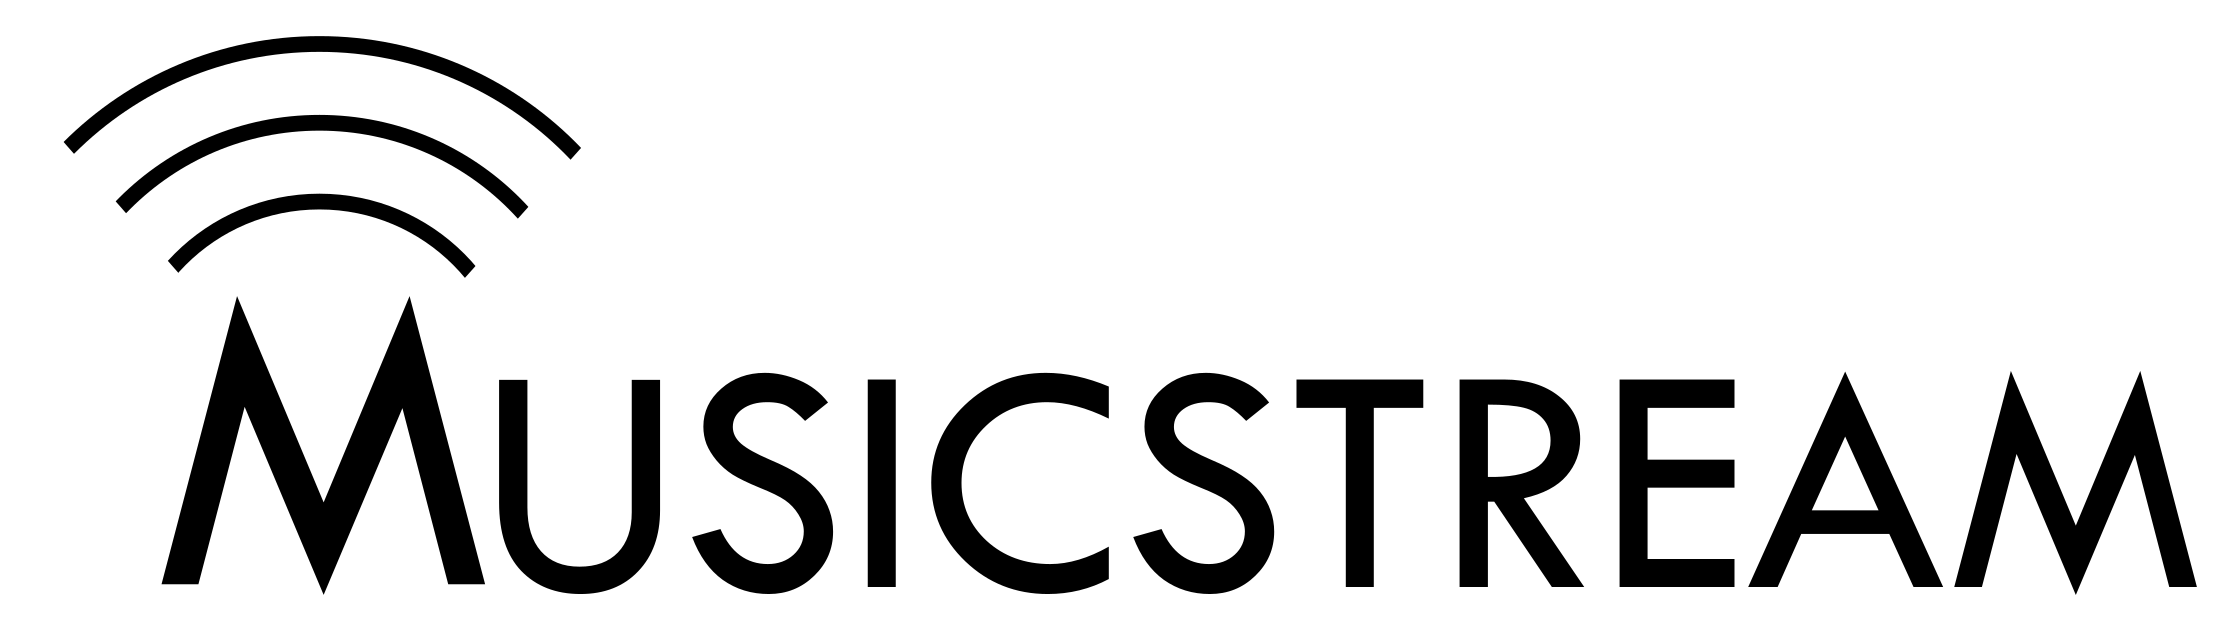 MUSICSTREAM logo